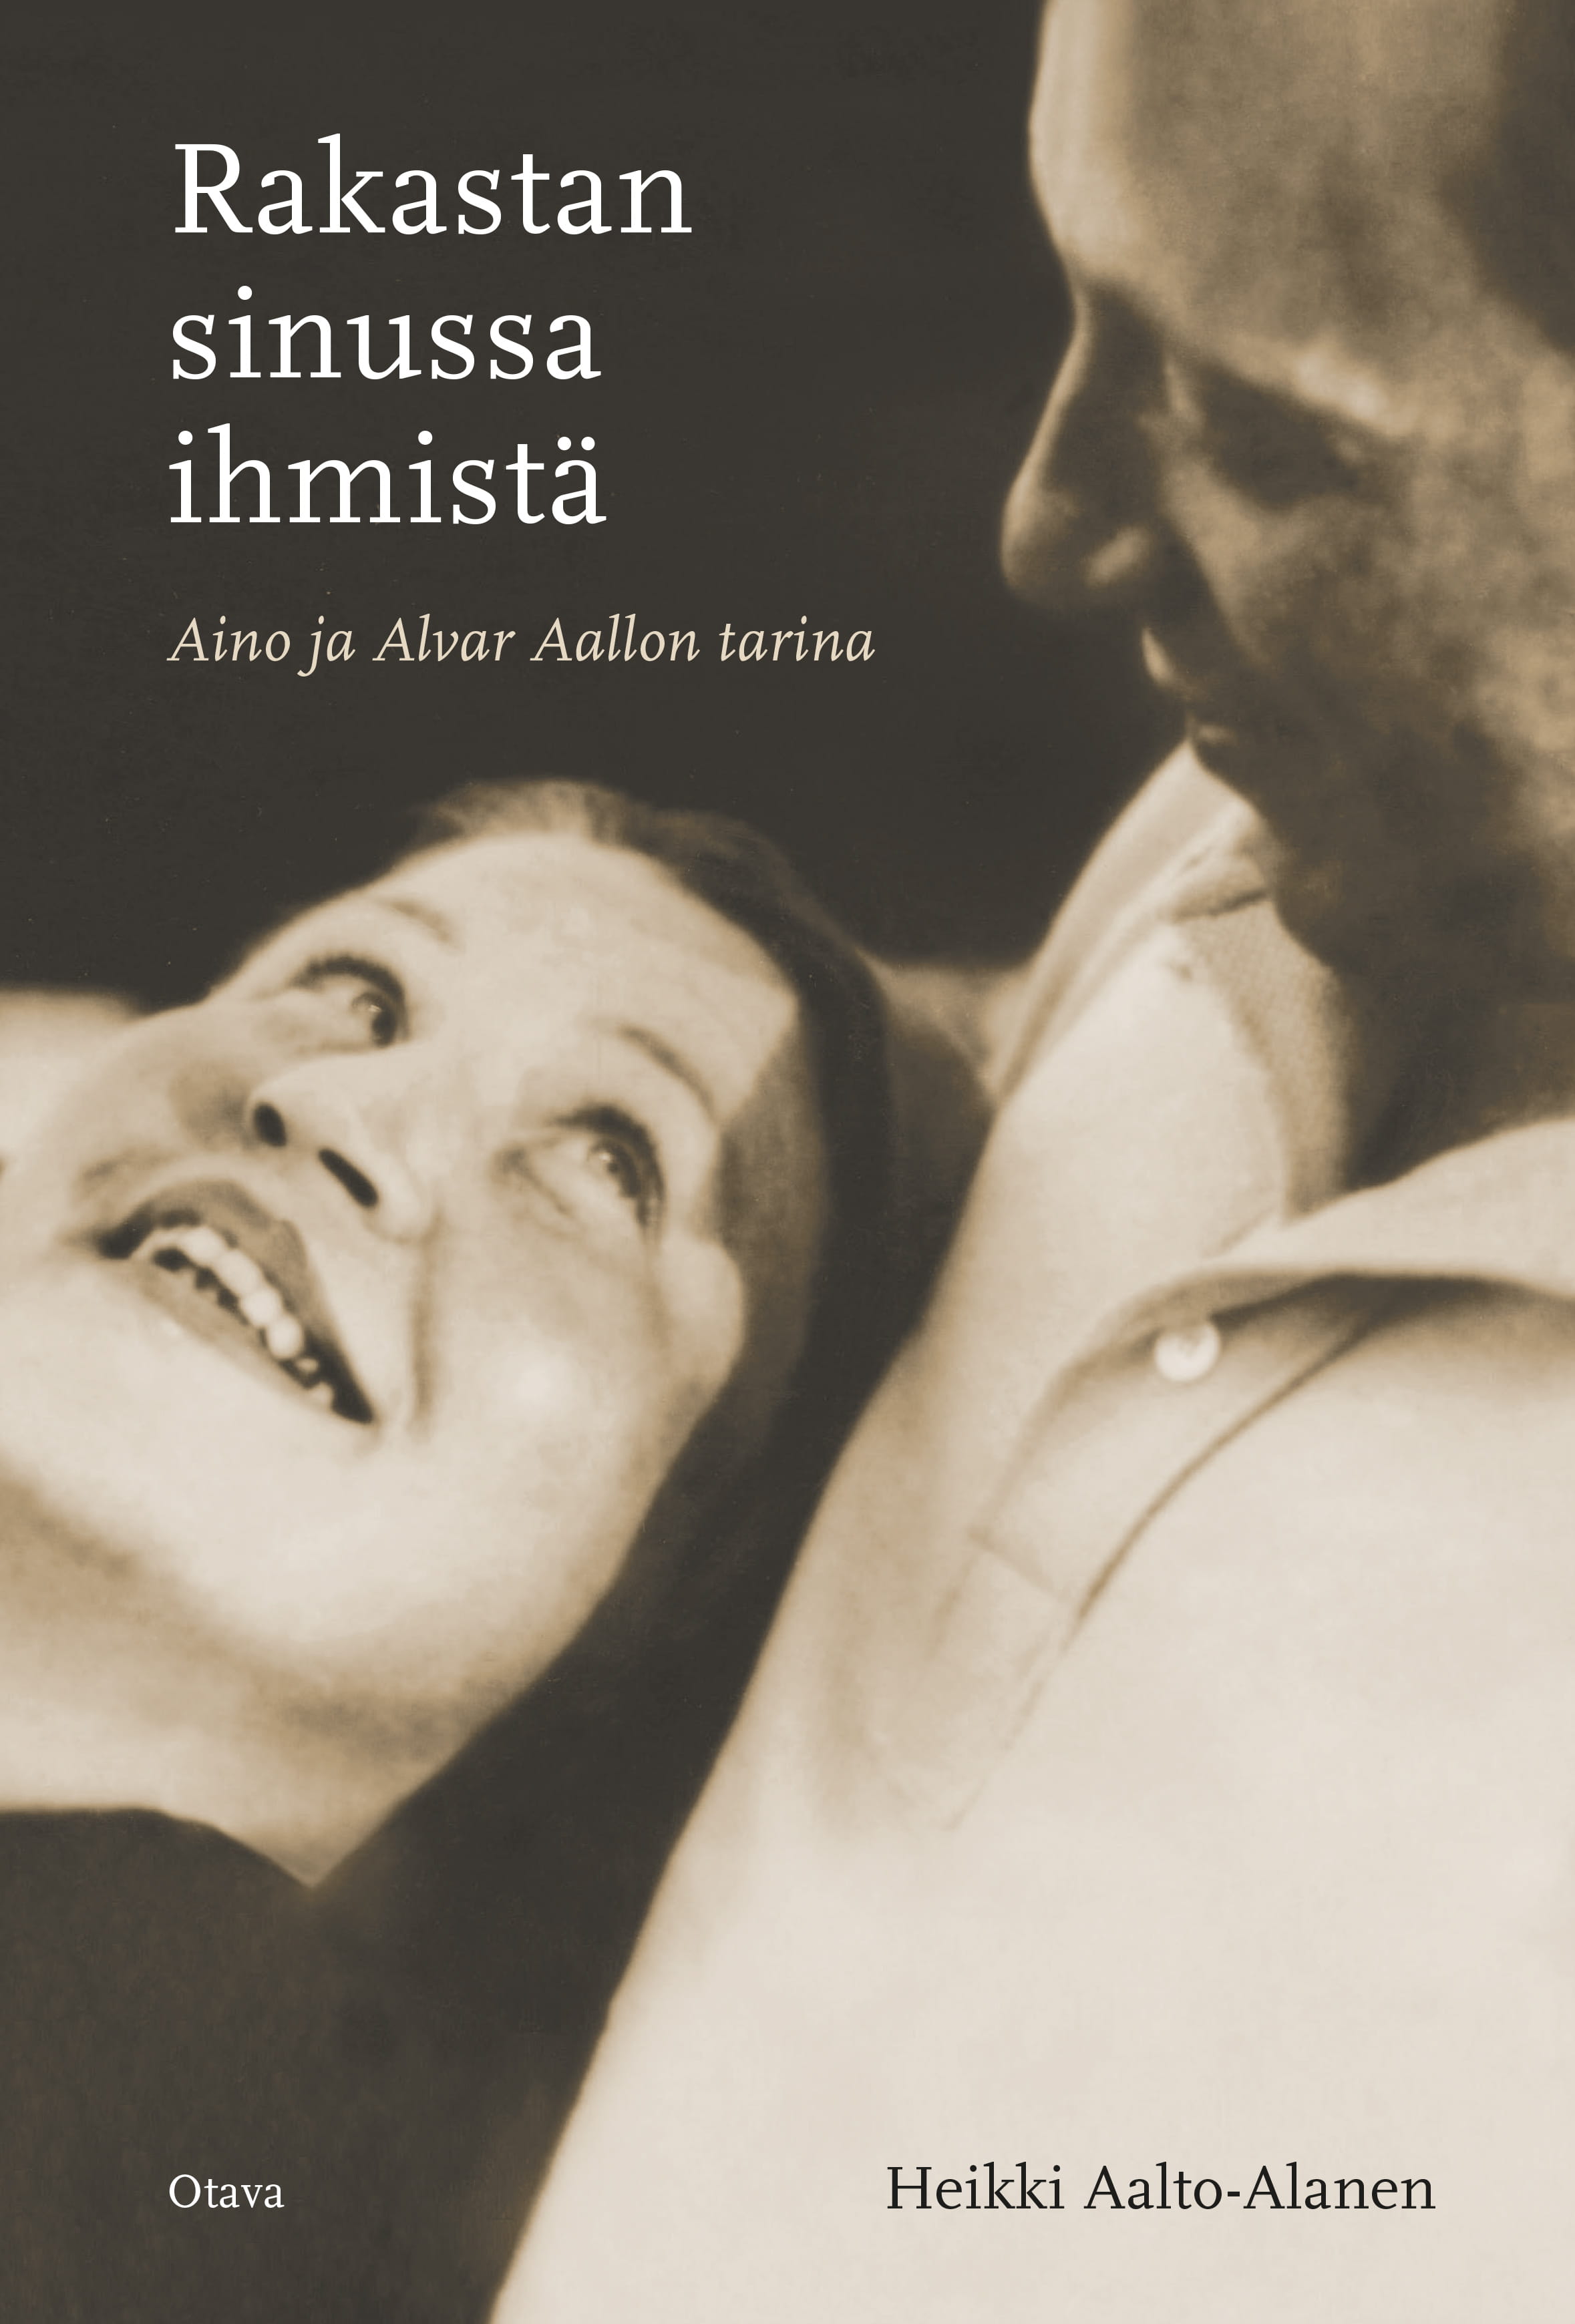 The Story of Aino and Alvar Aalto